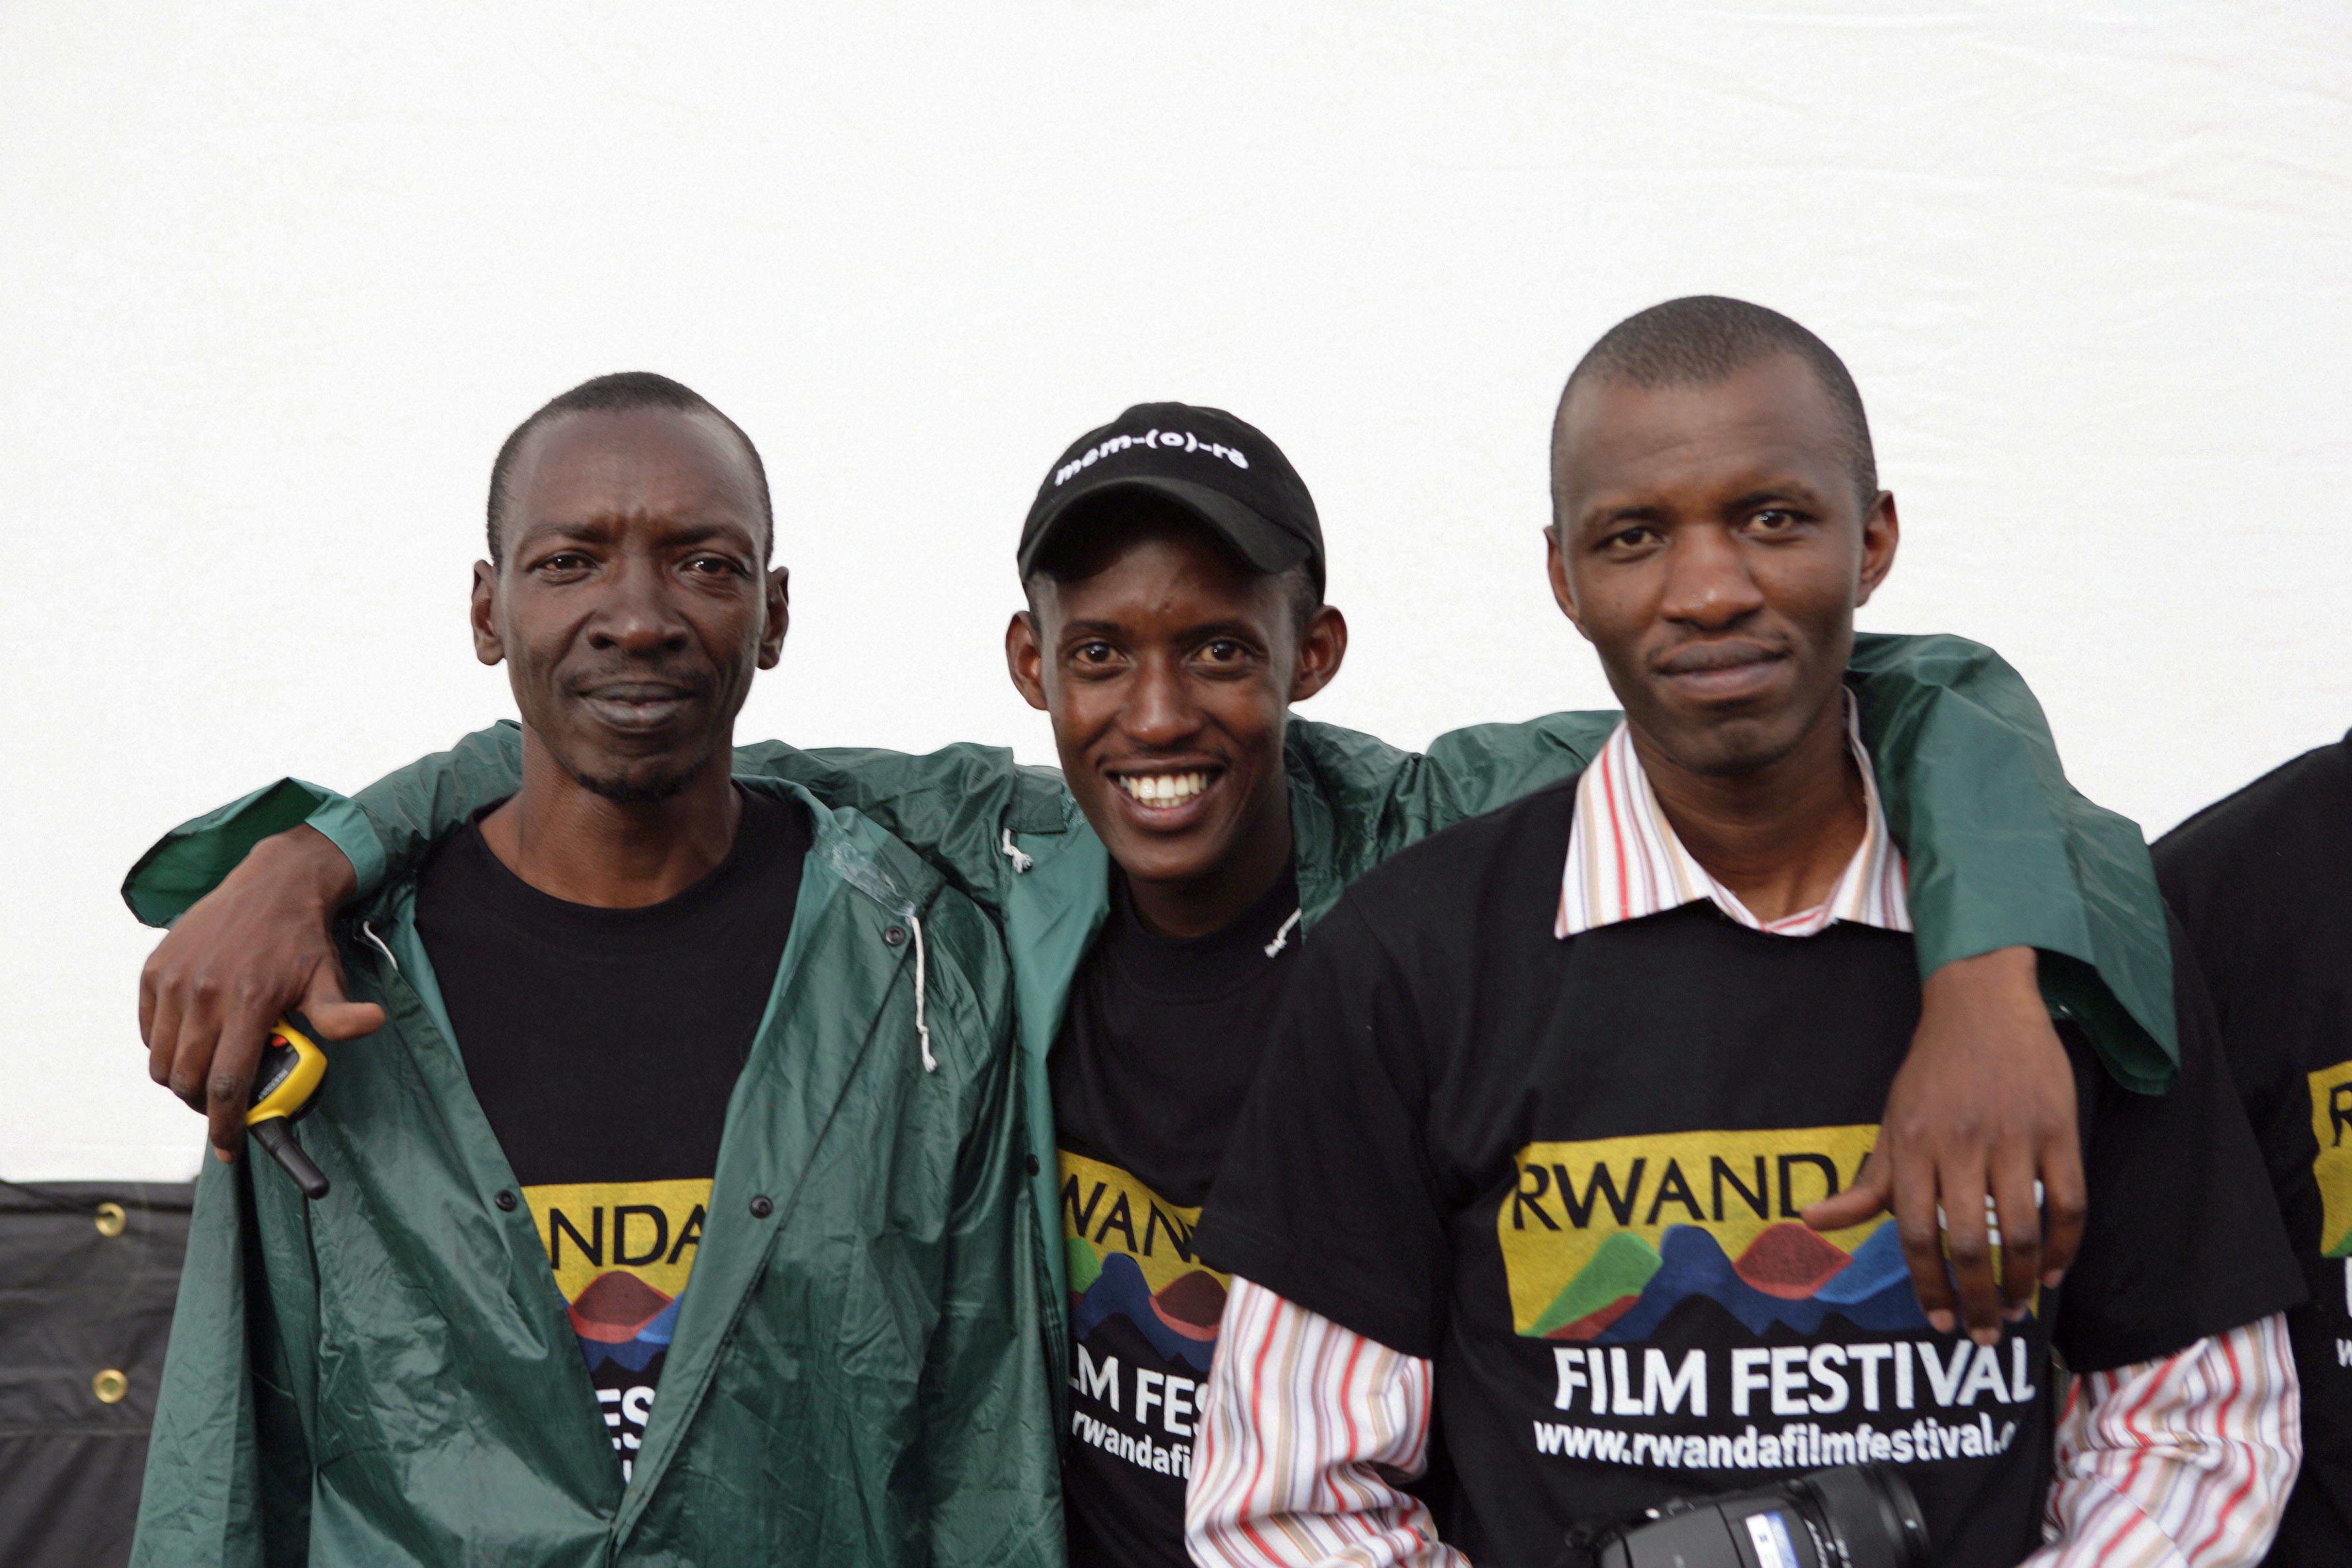 Rwanda Film Festiva- Hillywood Crew Inflatable team with screen